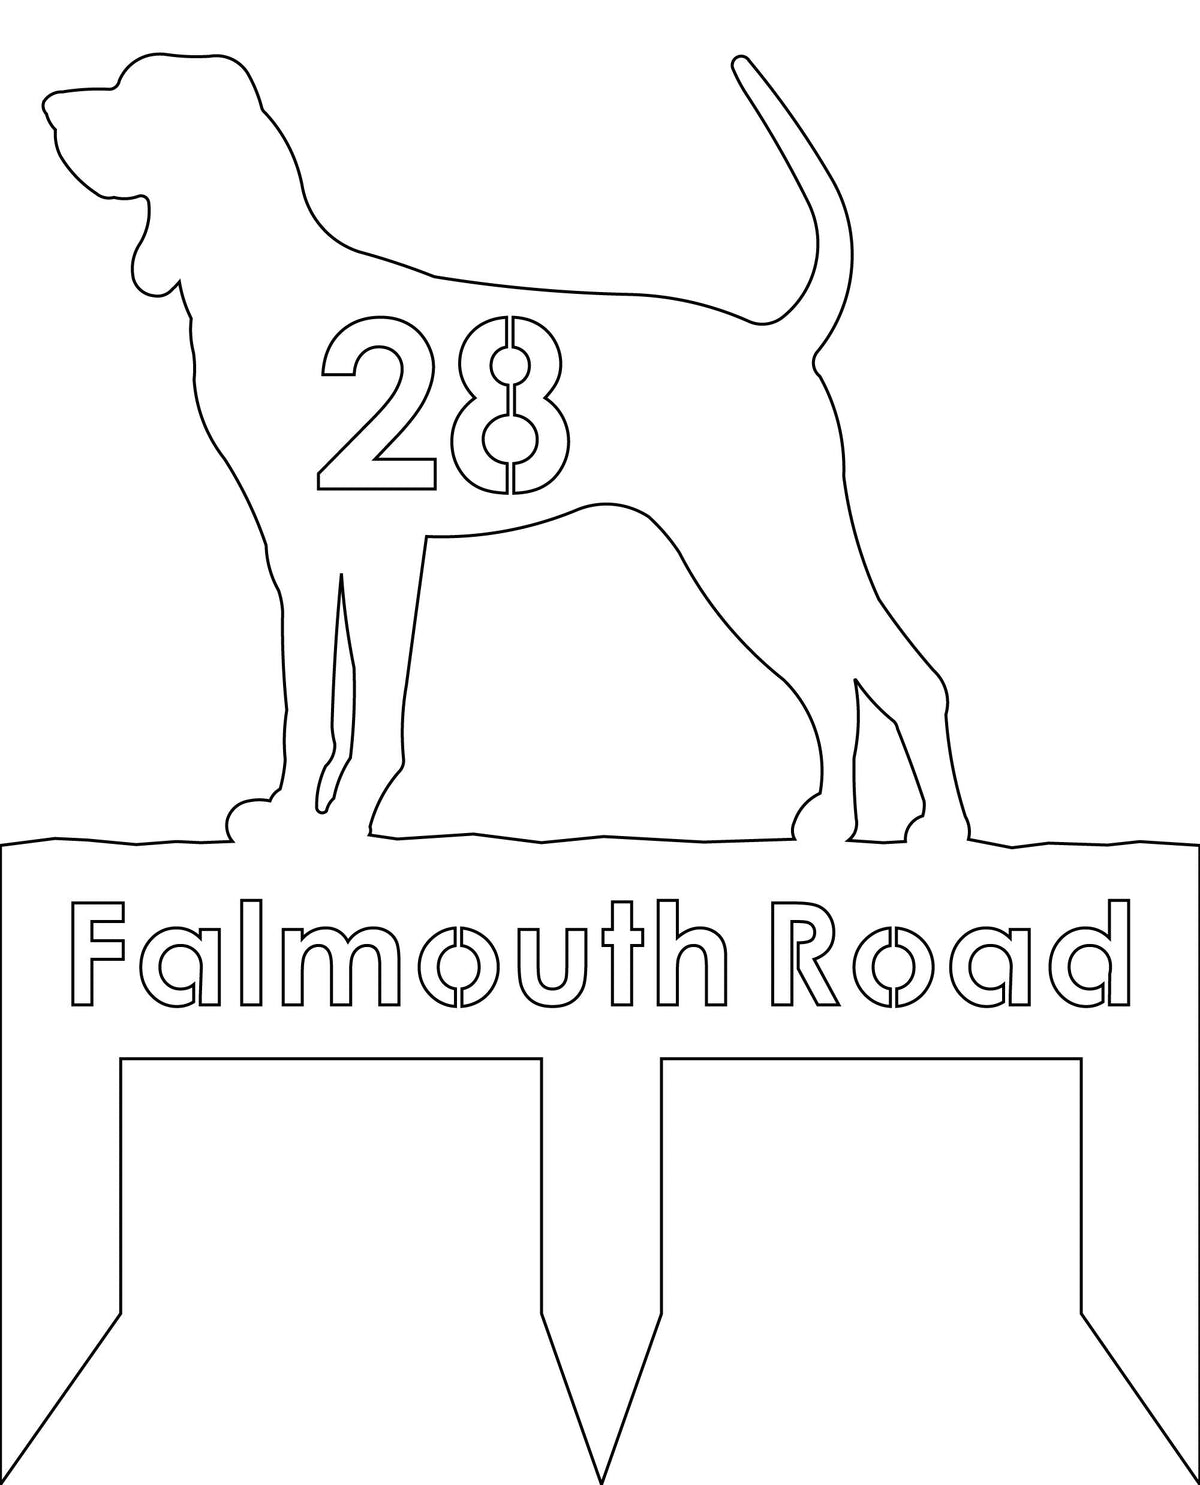 Coonhound dog address stake